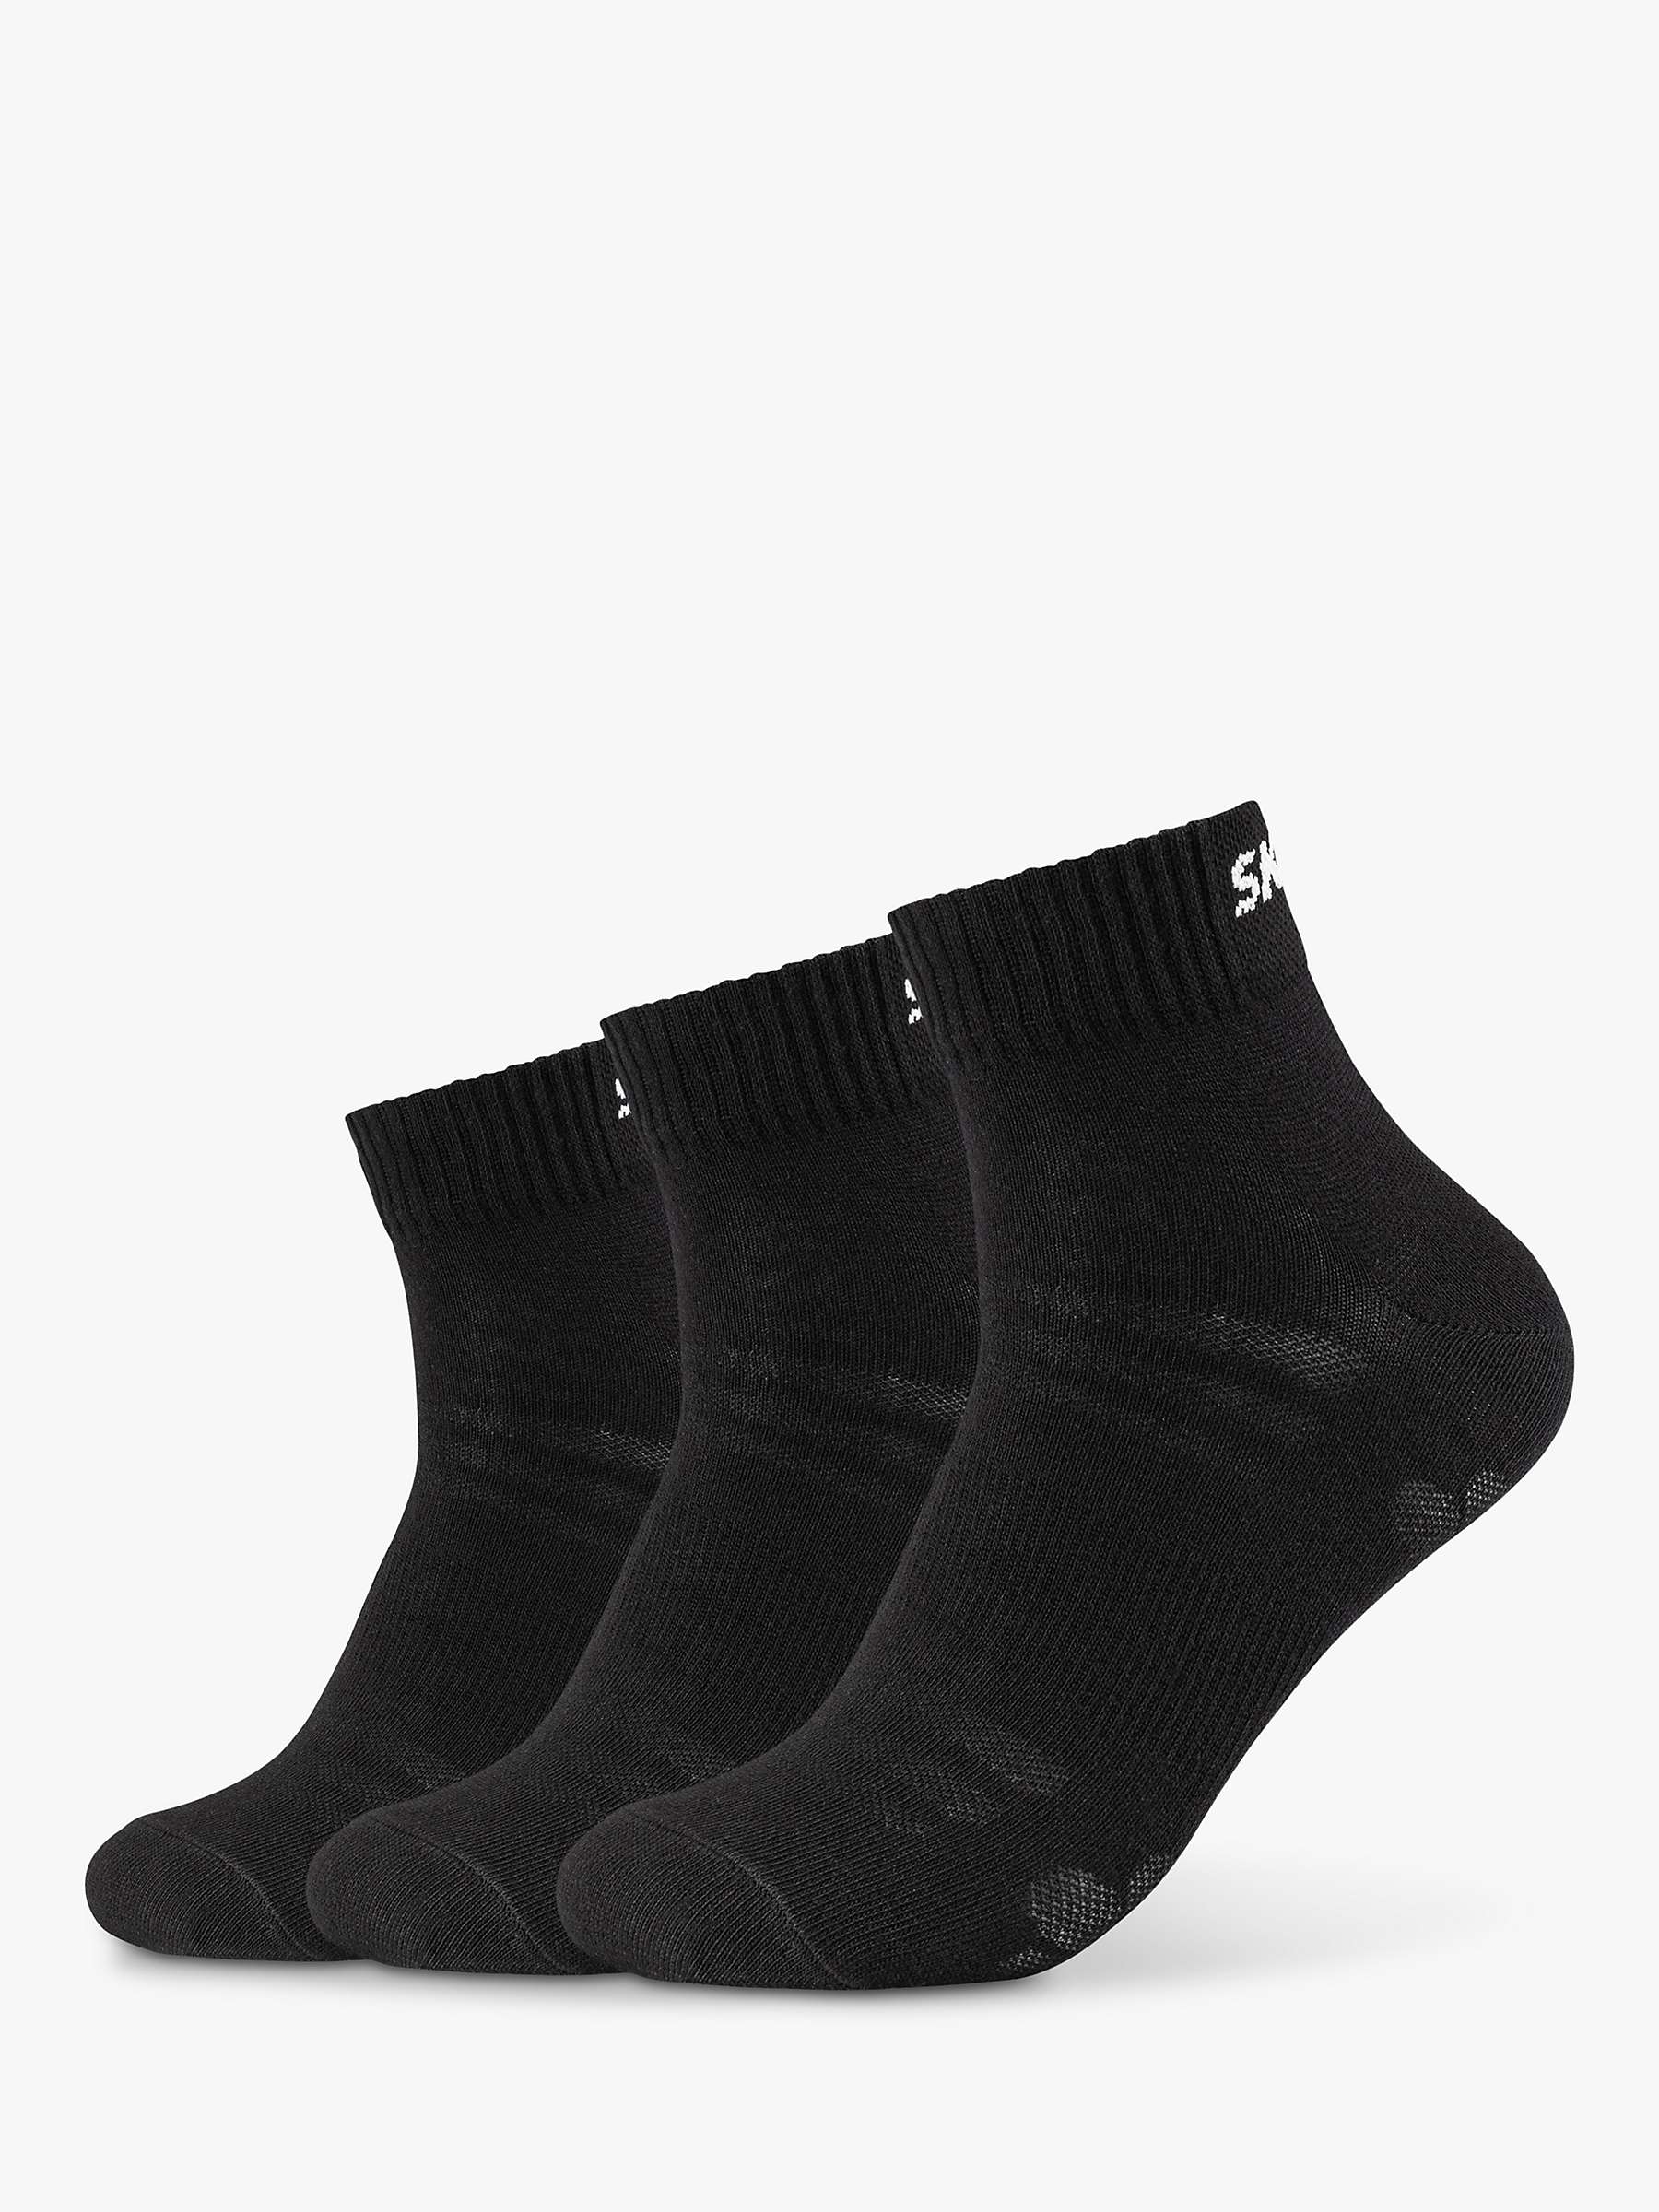 Buy Skechers Mesh Ventilation Ankle Socks, Pack of 3 Online at johnlewis.com